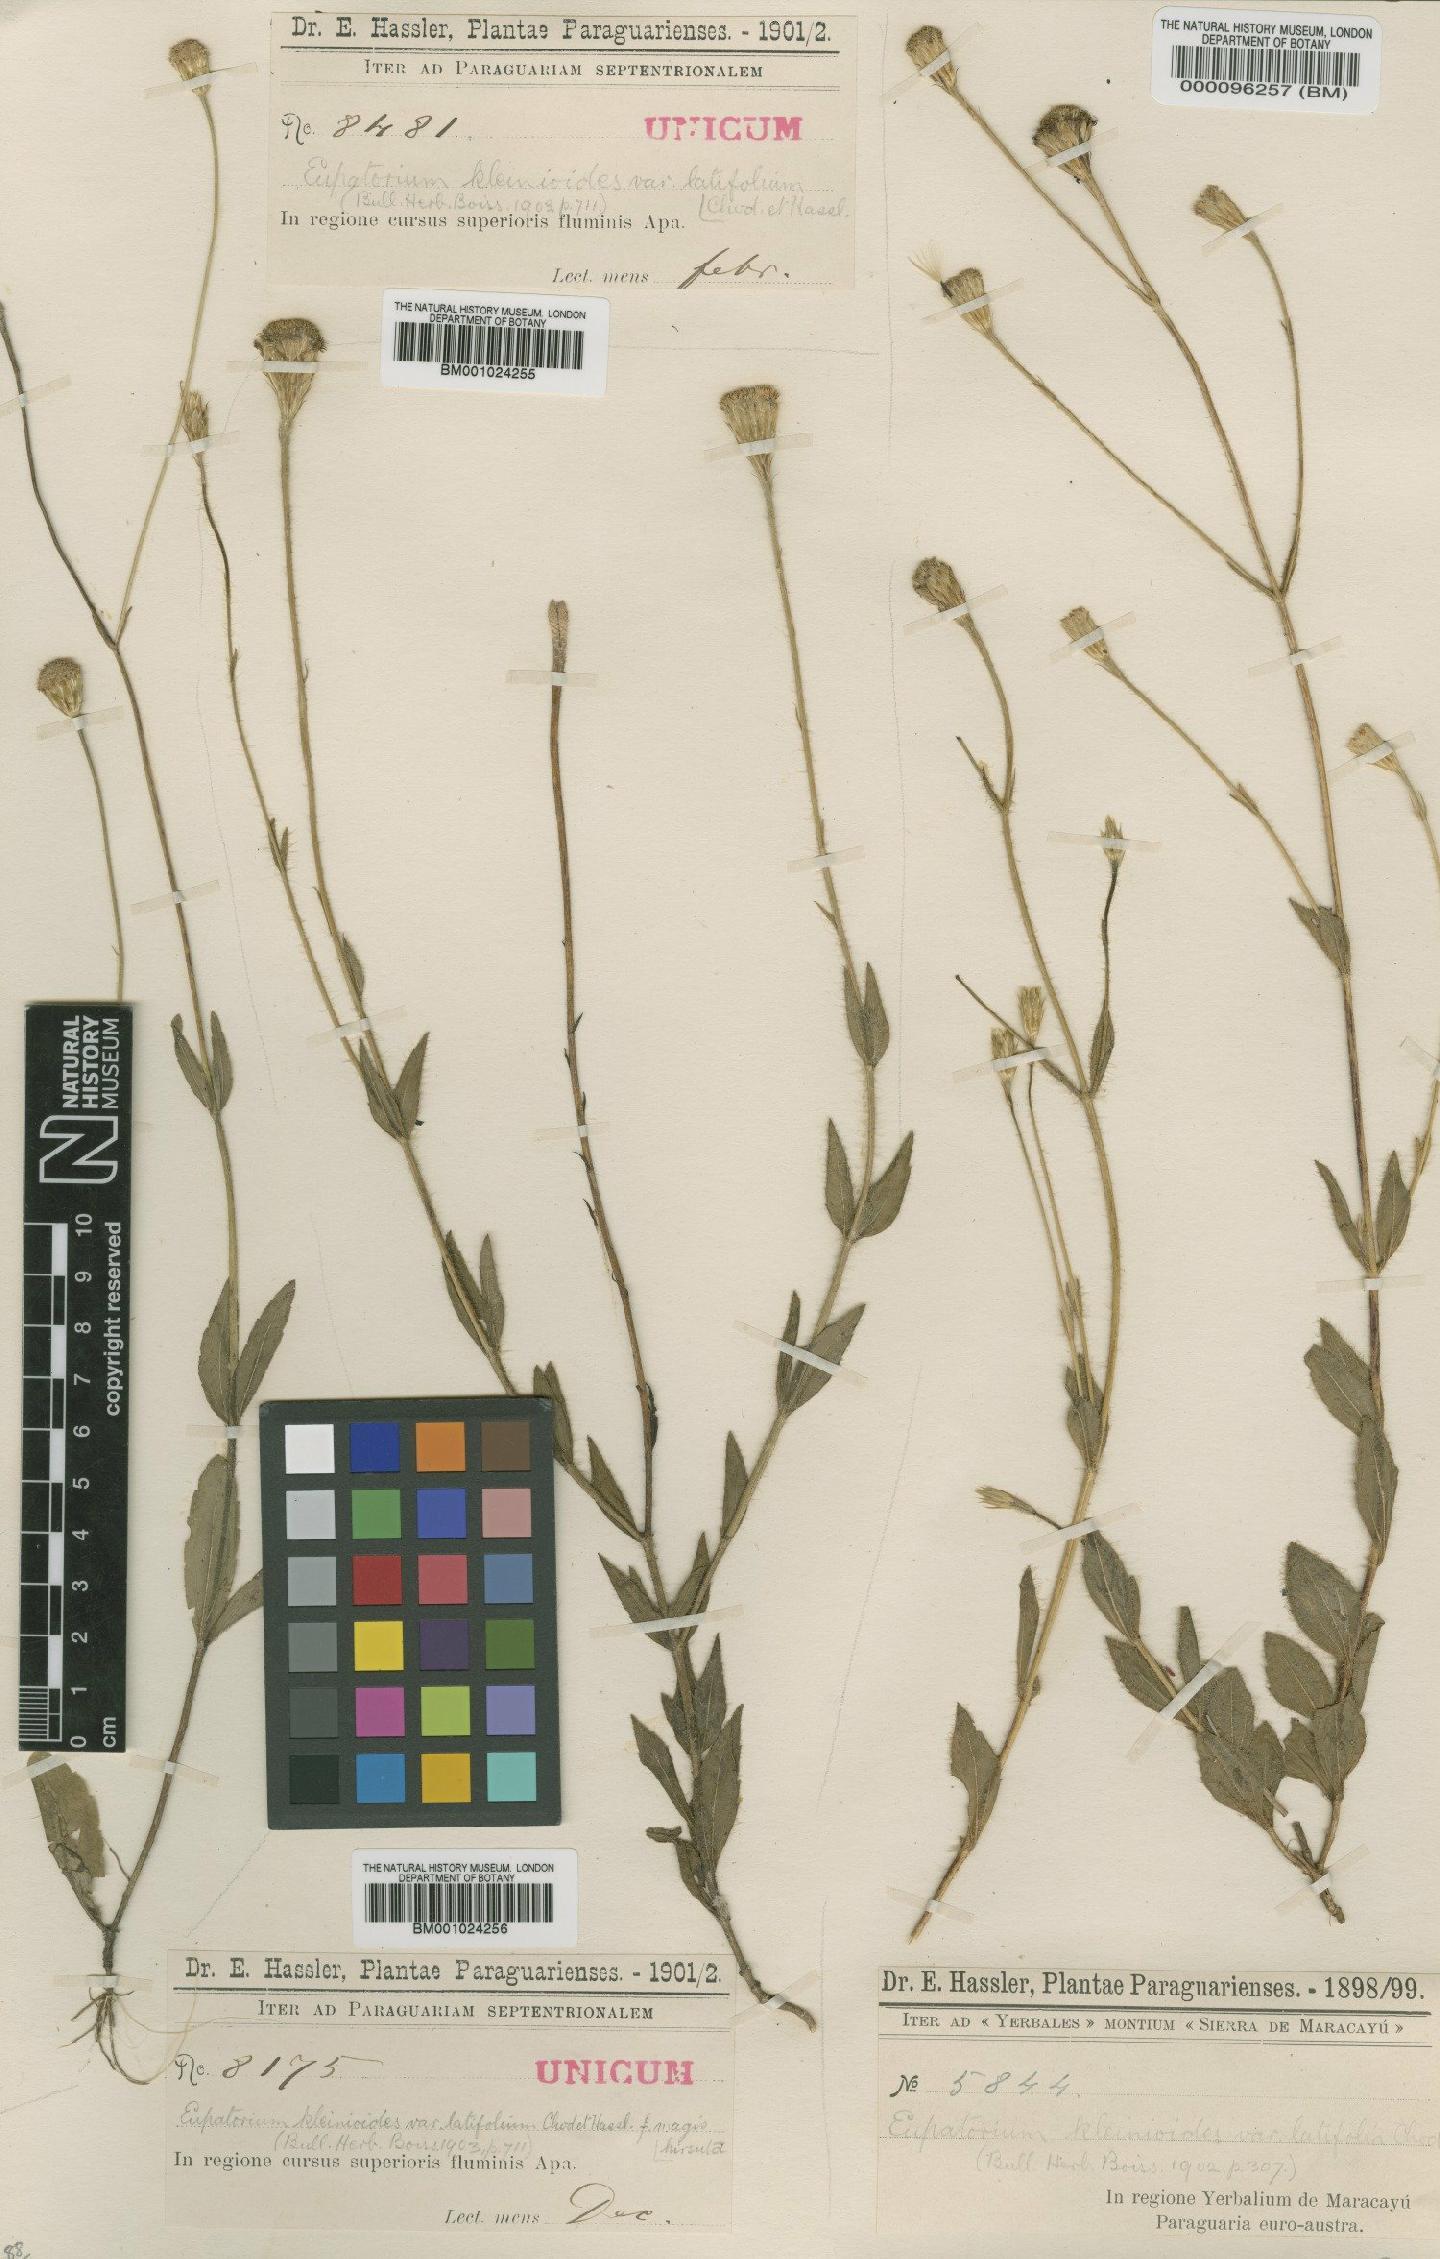 To NHMUK collection (Eupatorium kleinioides var. latifolium Chodat; Type; NHMUK:ecatalogue:652160)